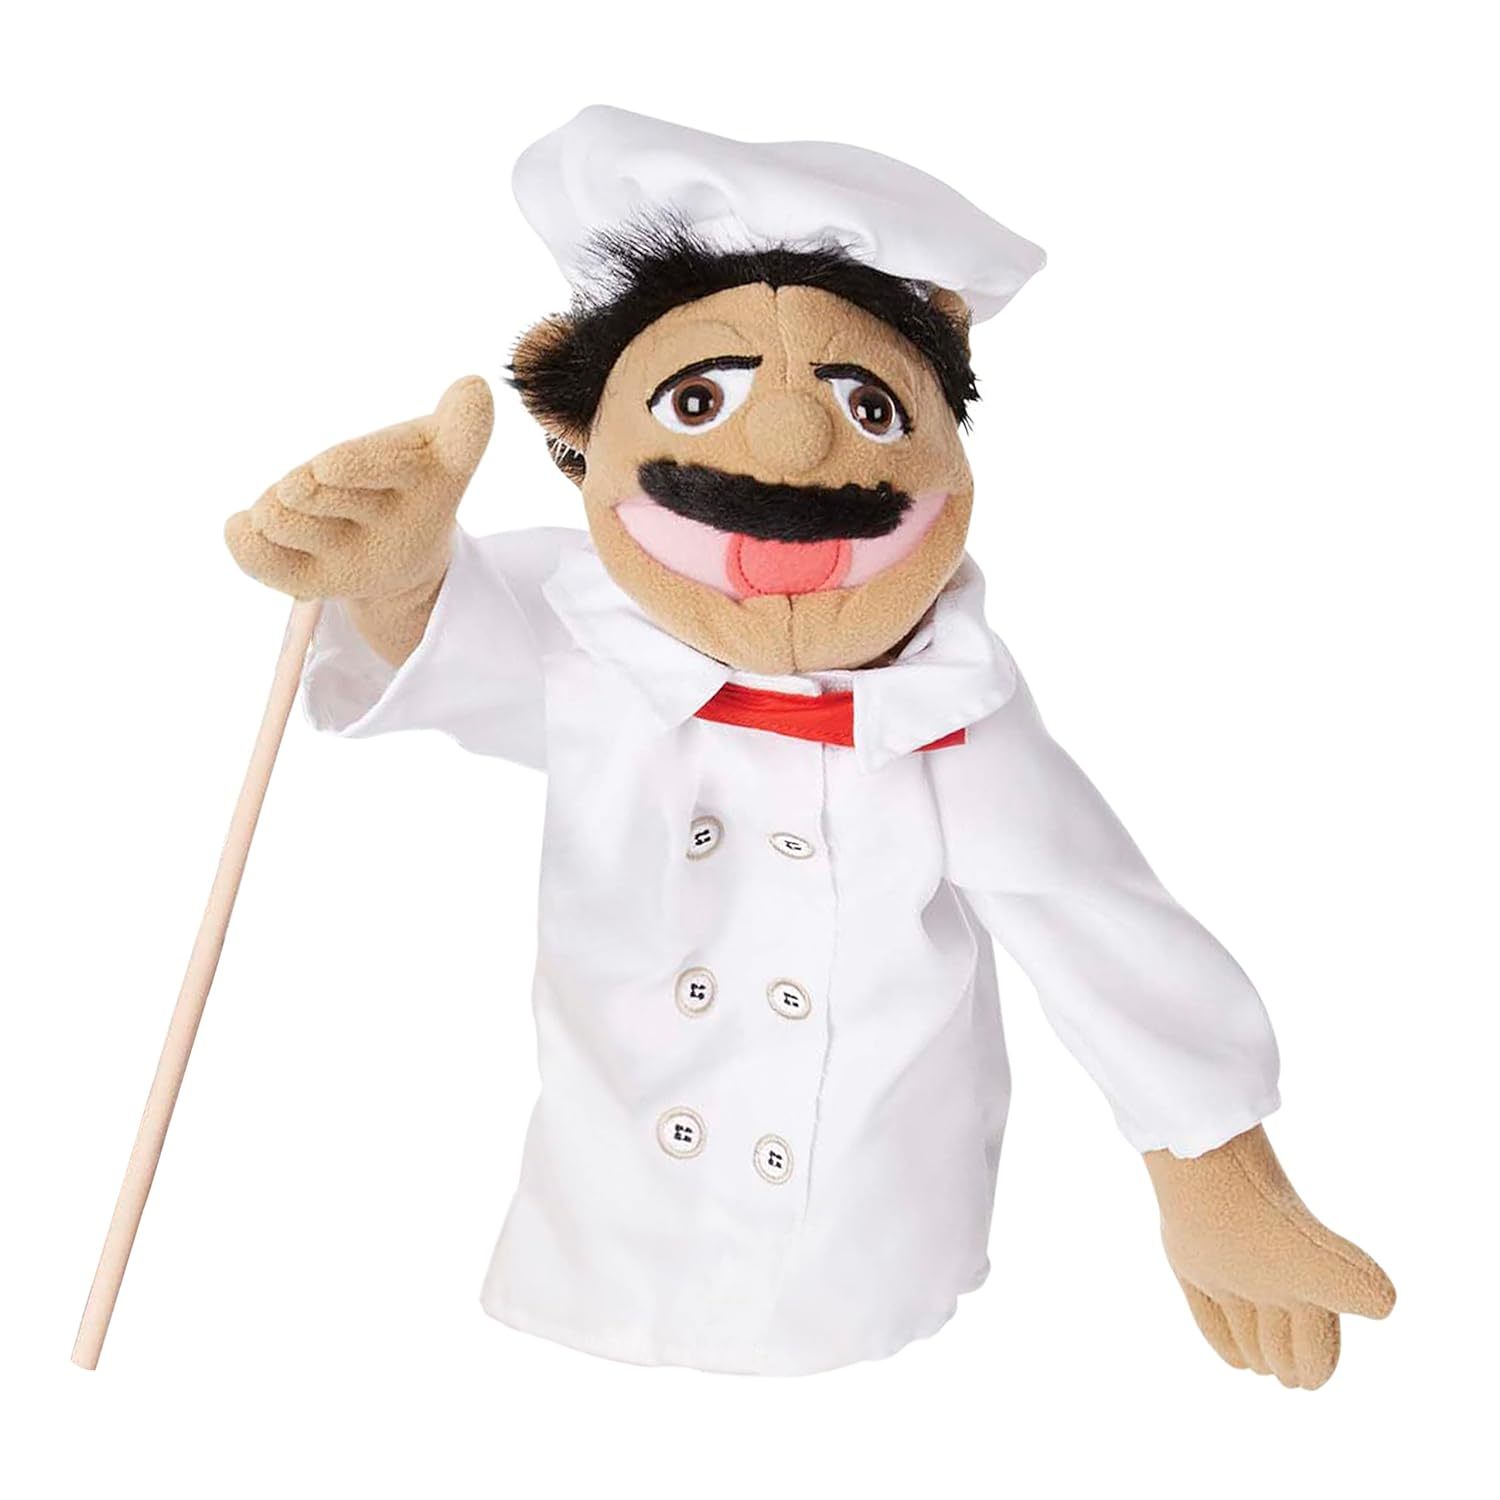 Melissa & Doug Chef Puppet (Al Dente) with Detachable Wooden Rod - Pretend Play  - $37.99